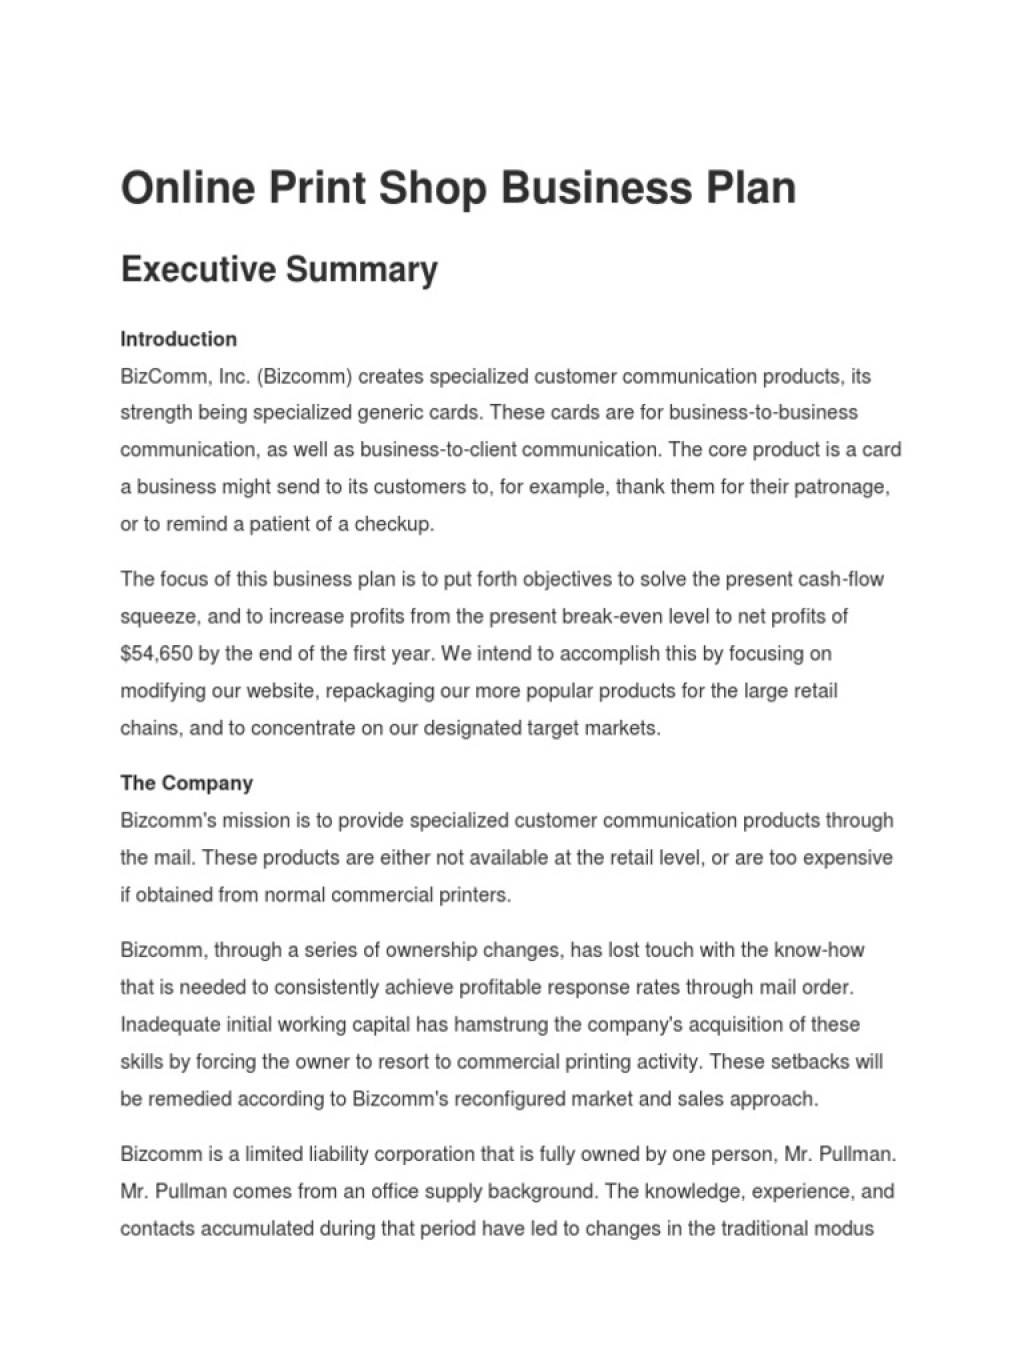 printing business business plan - Online Print Shop Business Plan PDF  PDF  Direct Marketing  Retail